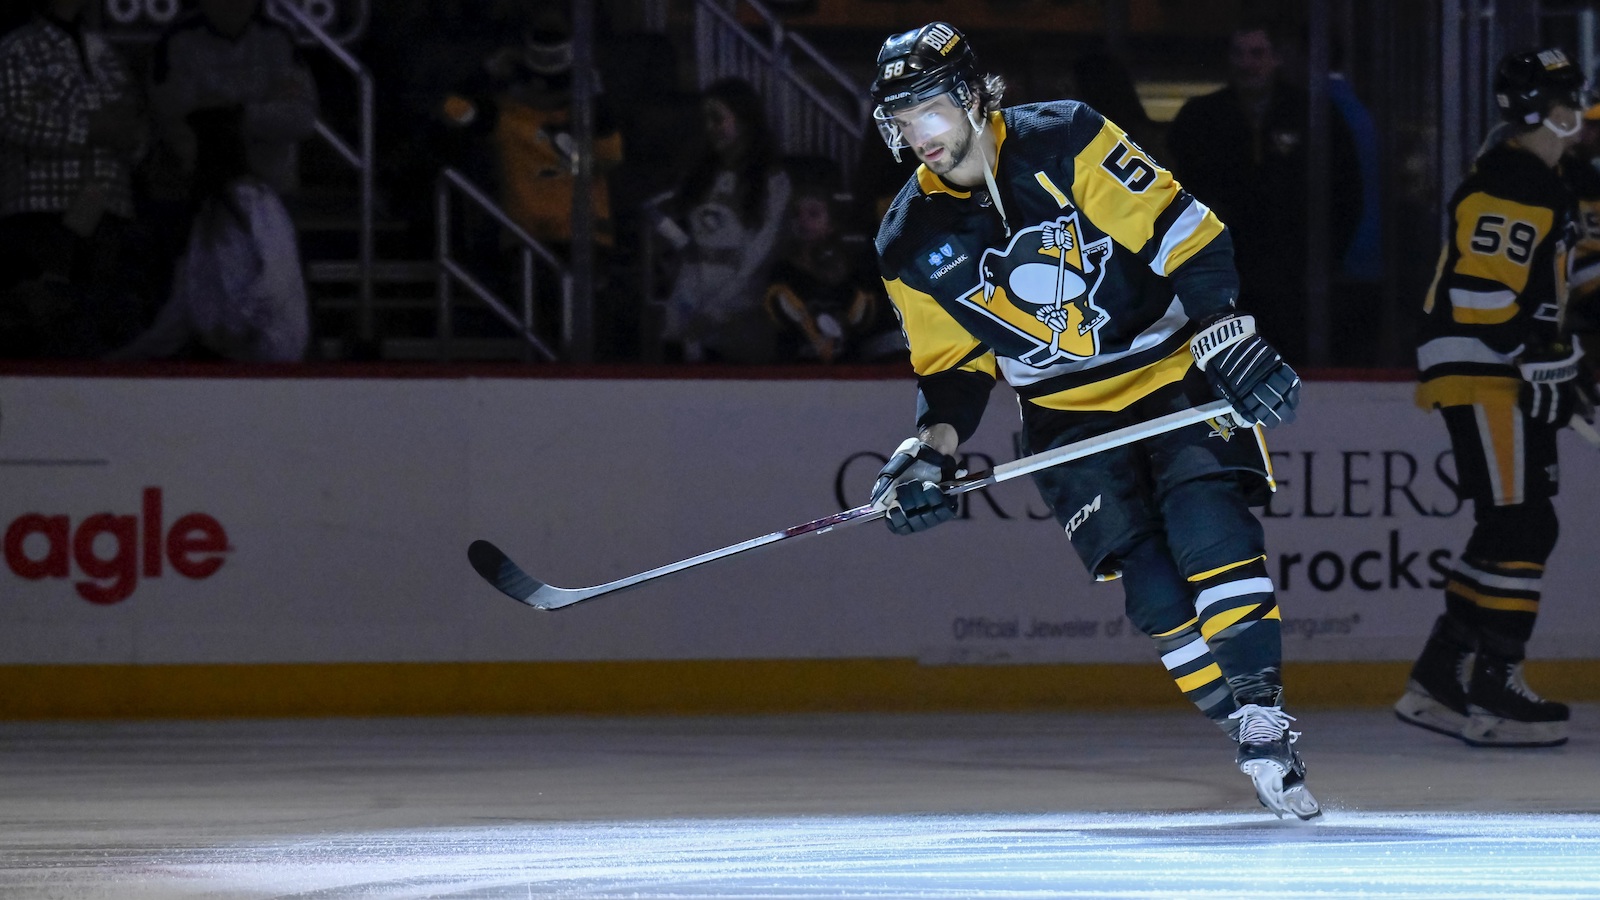 Penguins defenseman Kris Letang remains sidelined due to injury